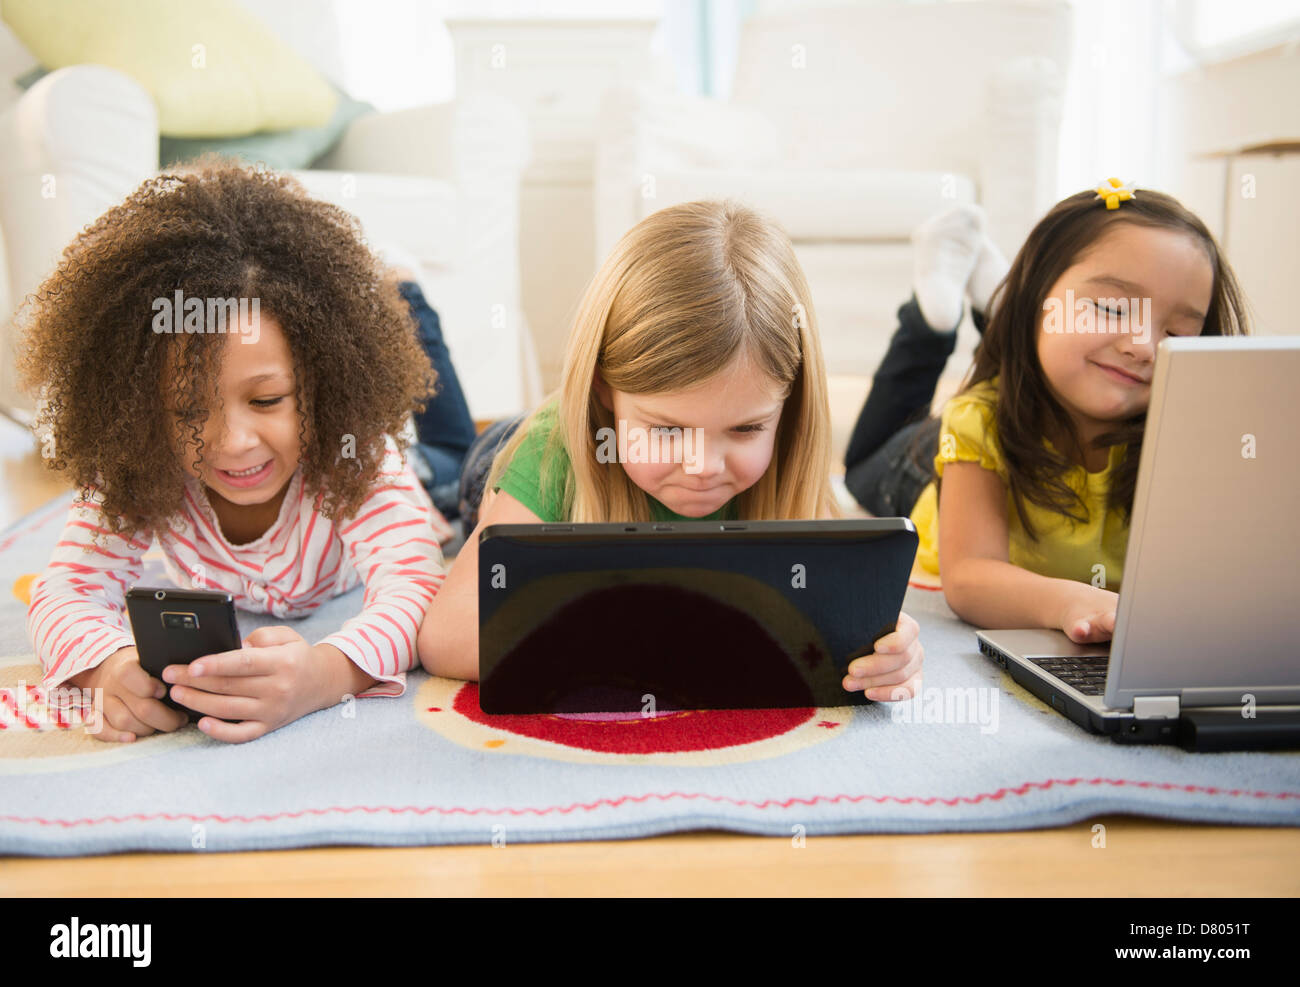 Girls using technology on carpet Stock Photo